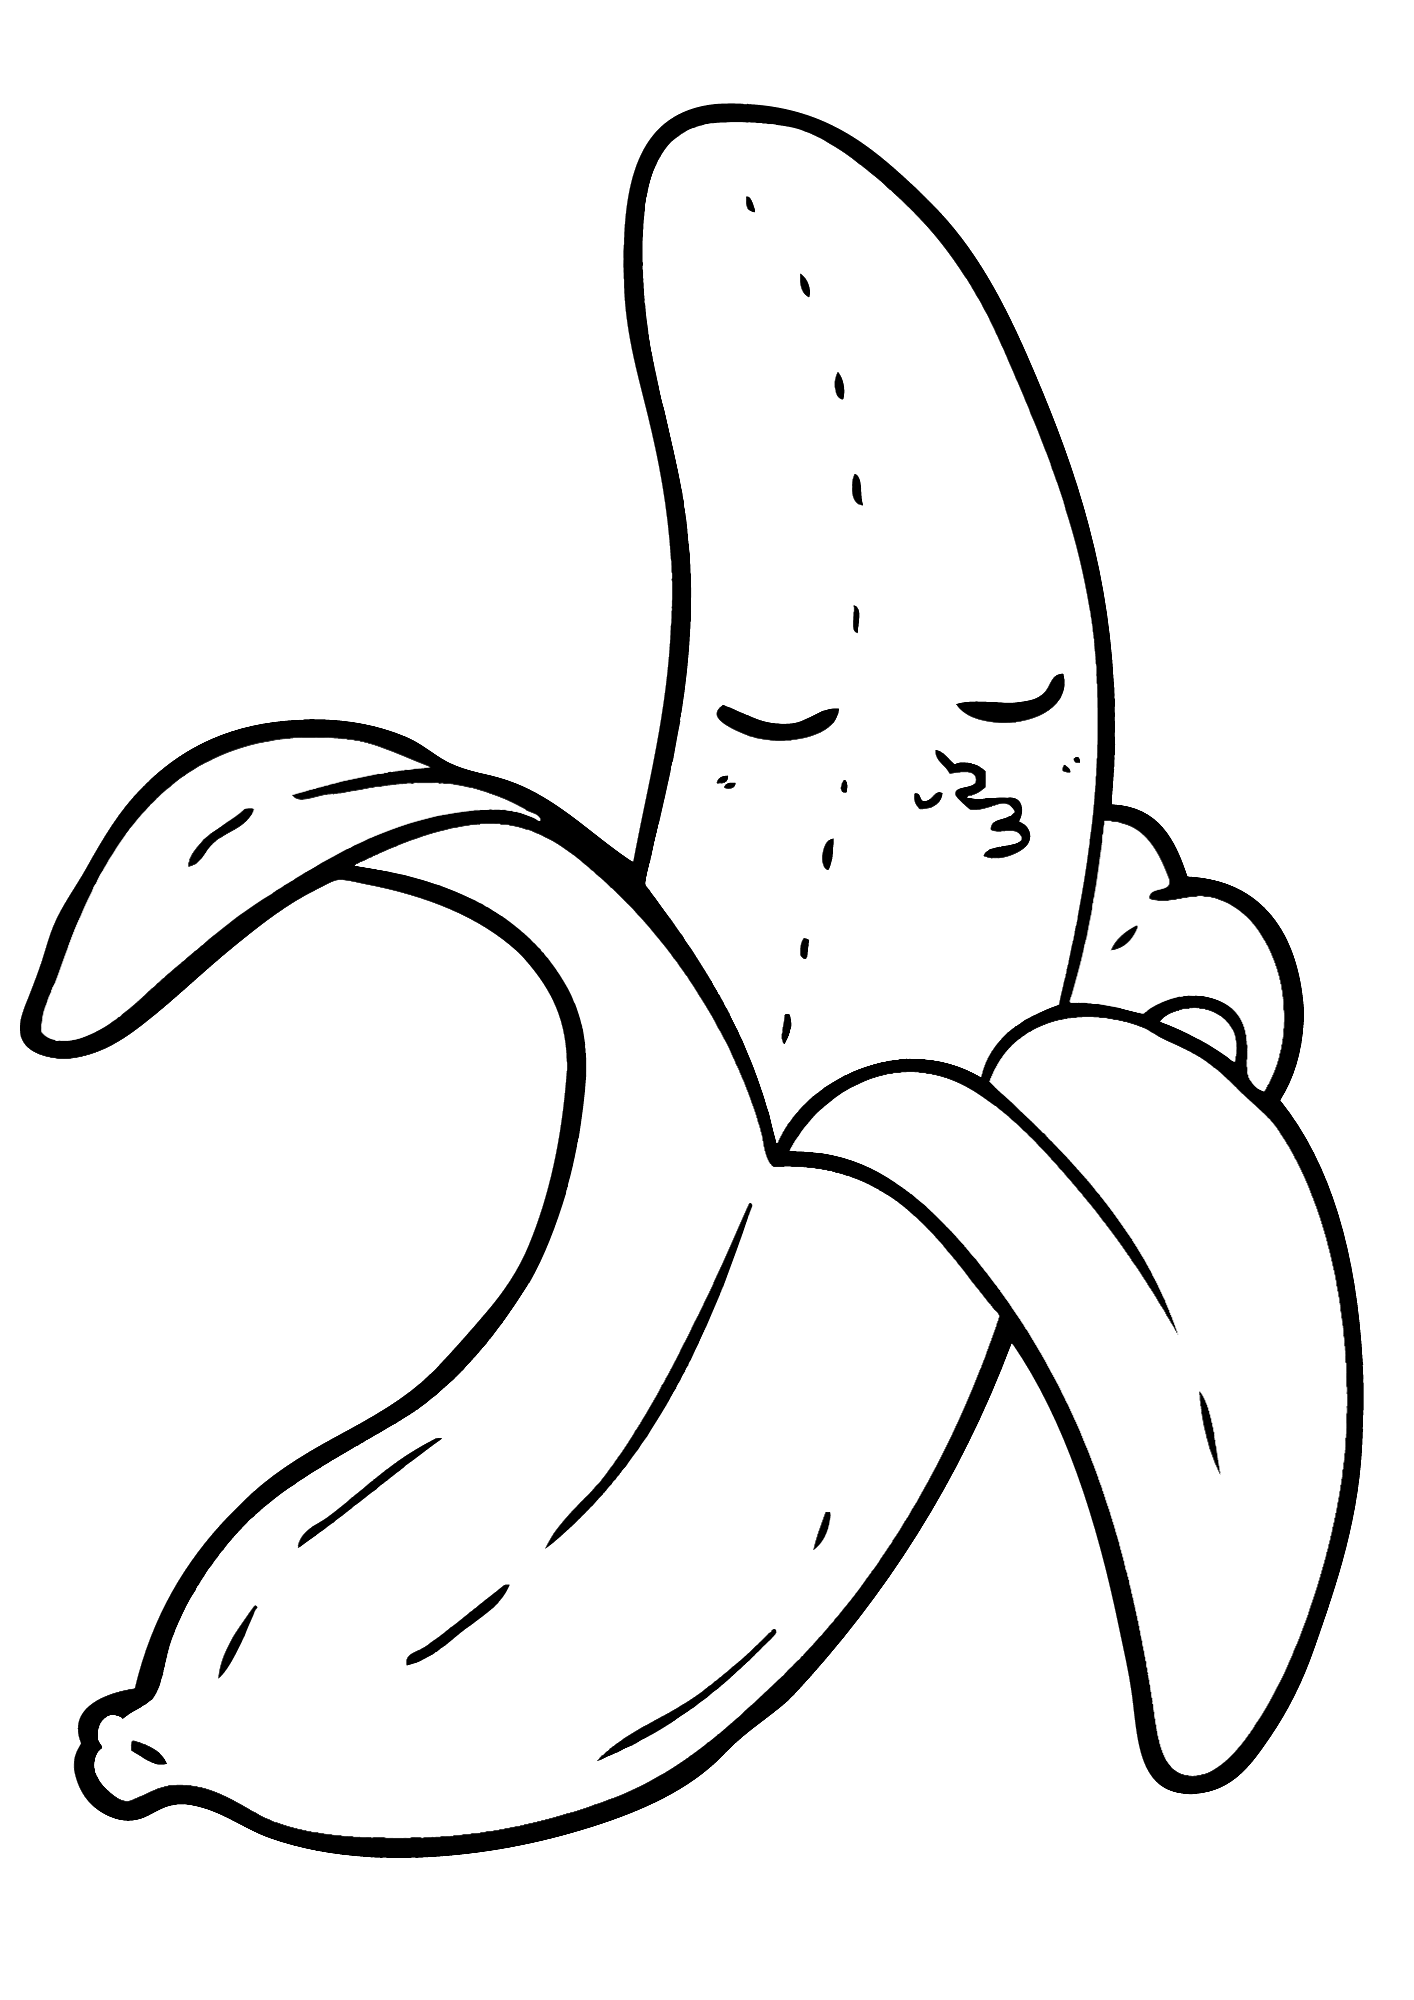 Bananas - JORZ ART